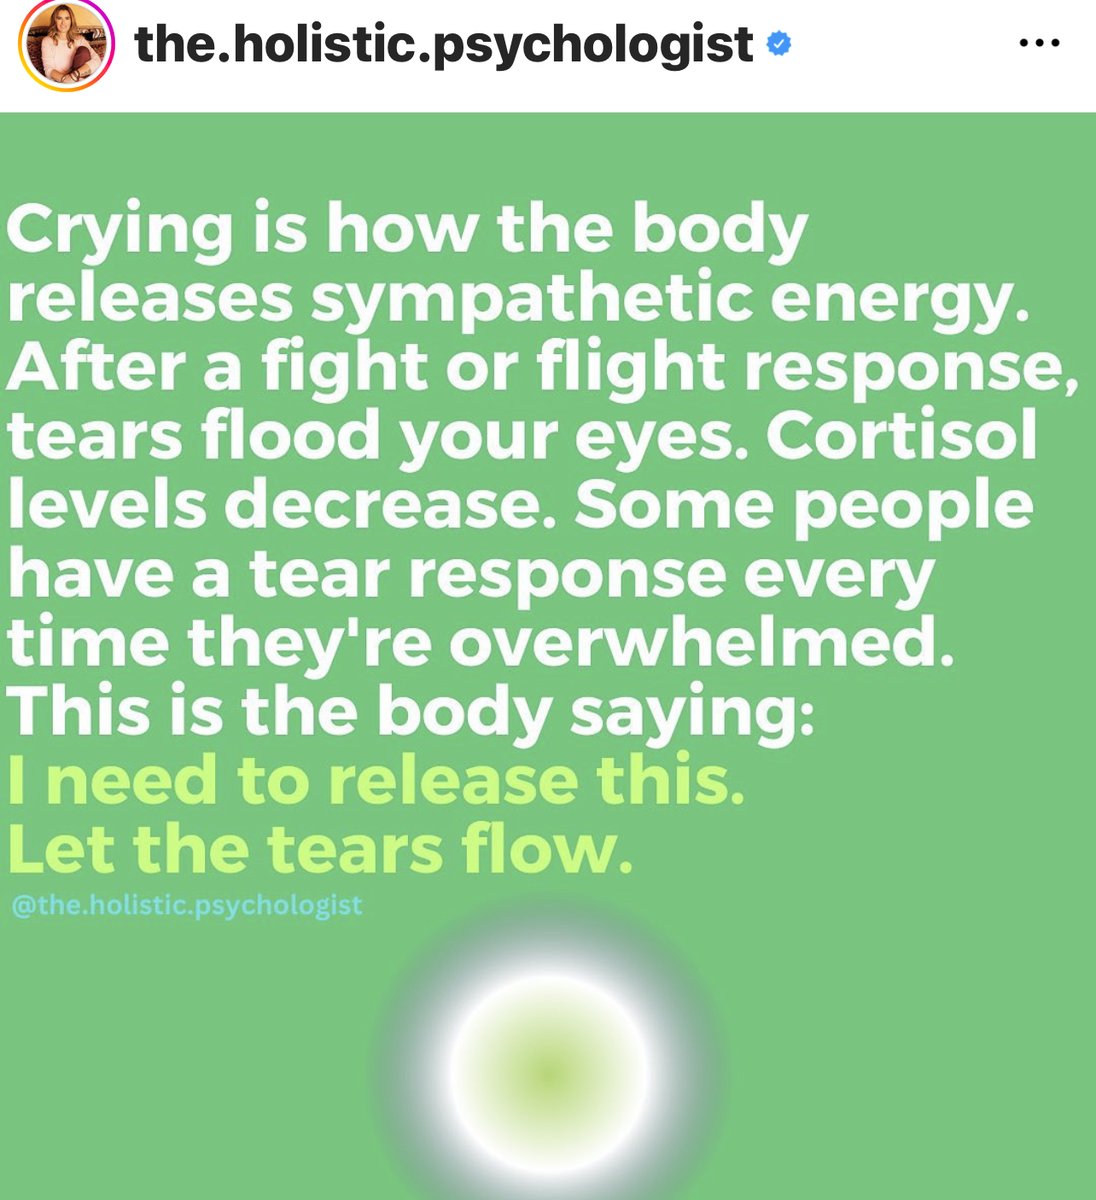 So true! #theholisticpsychologist #tears #Monday